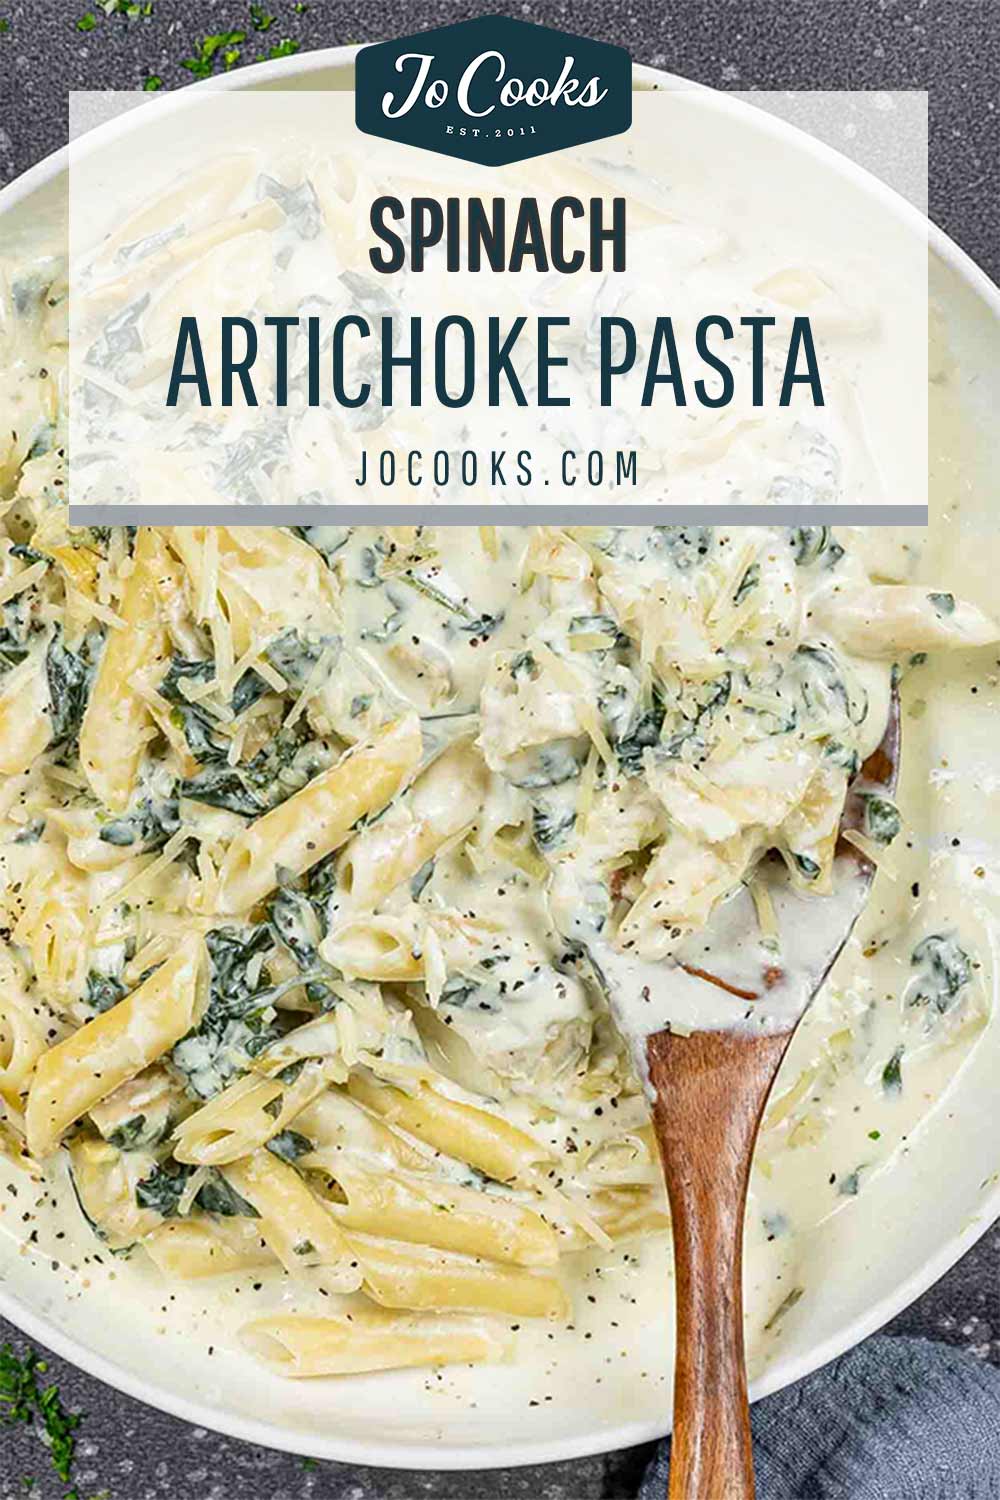 https://www.jocooks.com/wp-content/uploads/2018/11/spinach-artichoke-pasta.jpg